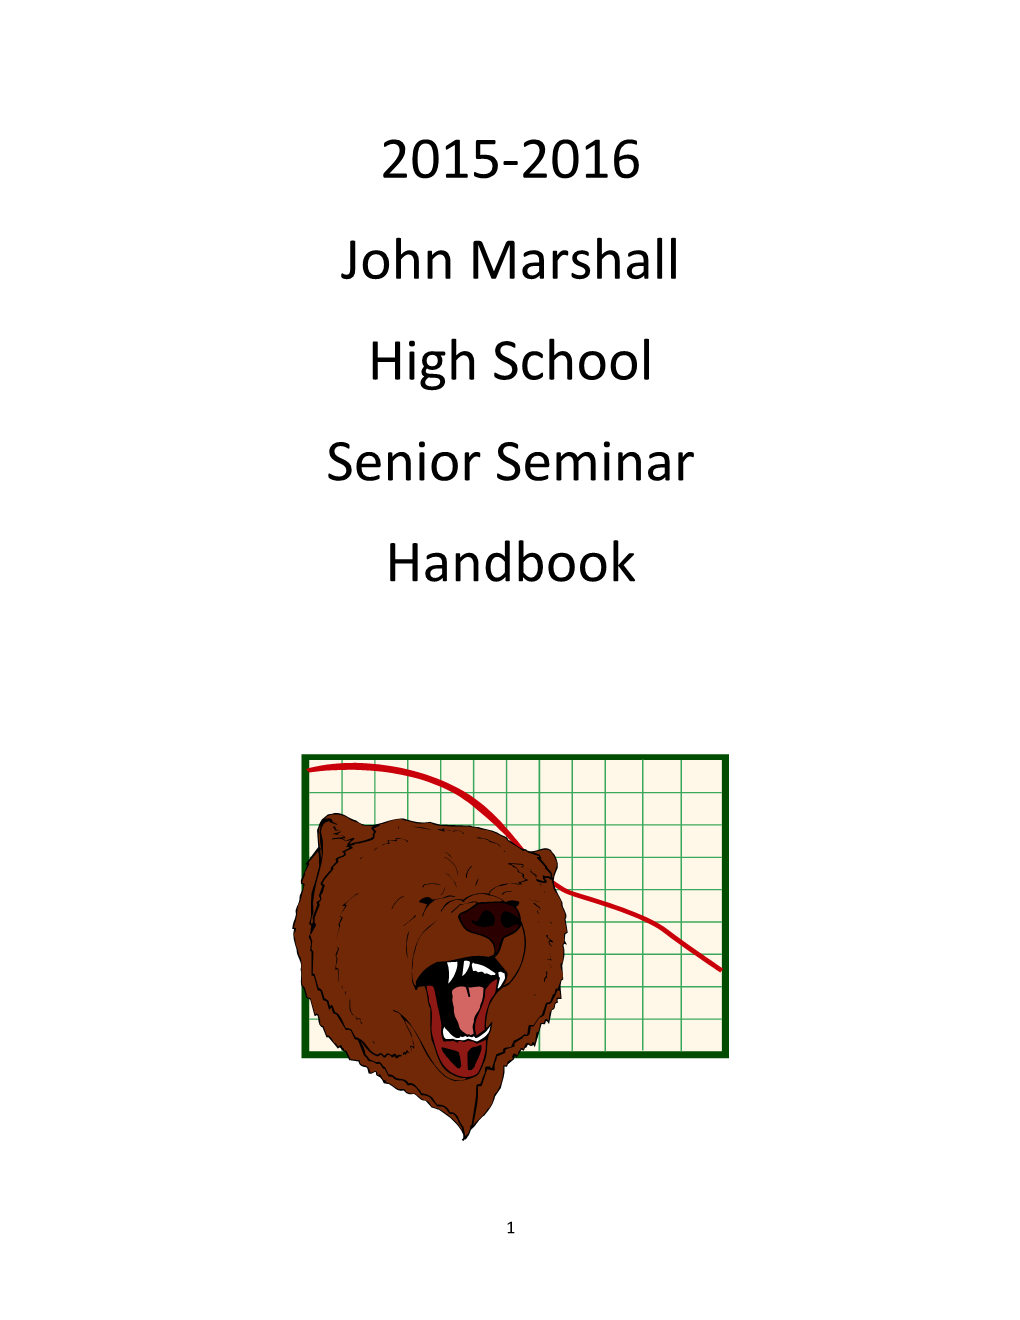 John Marshall High School Introduction to Senior Seminar